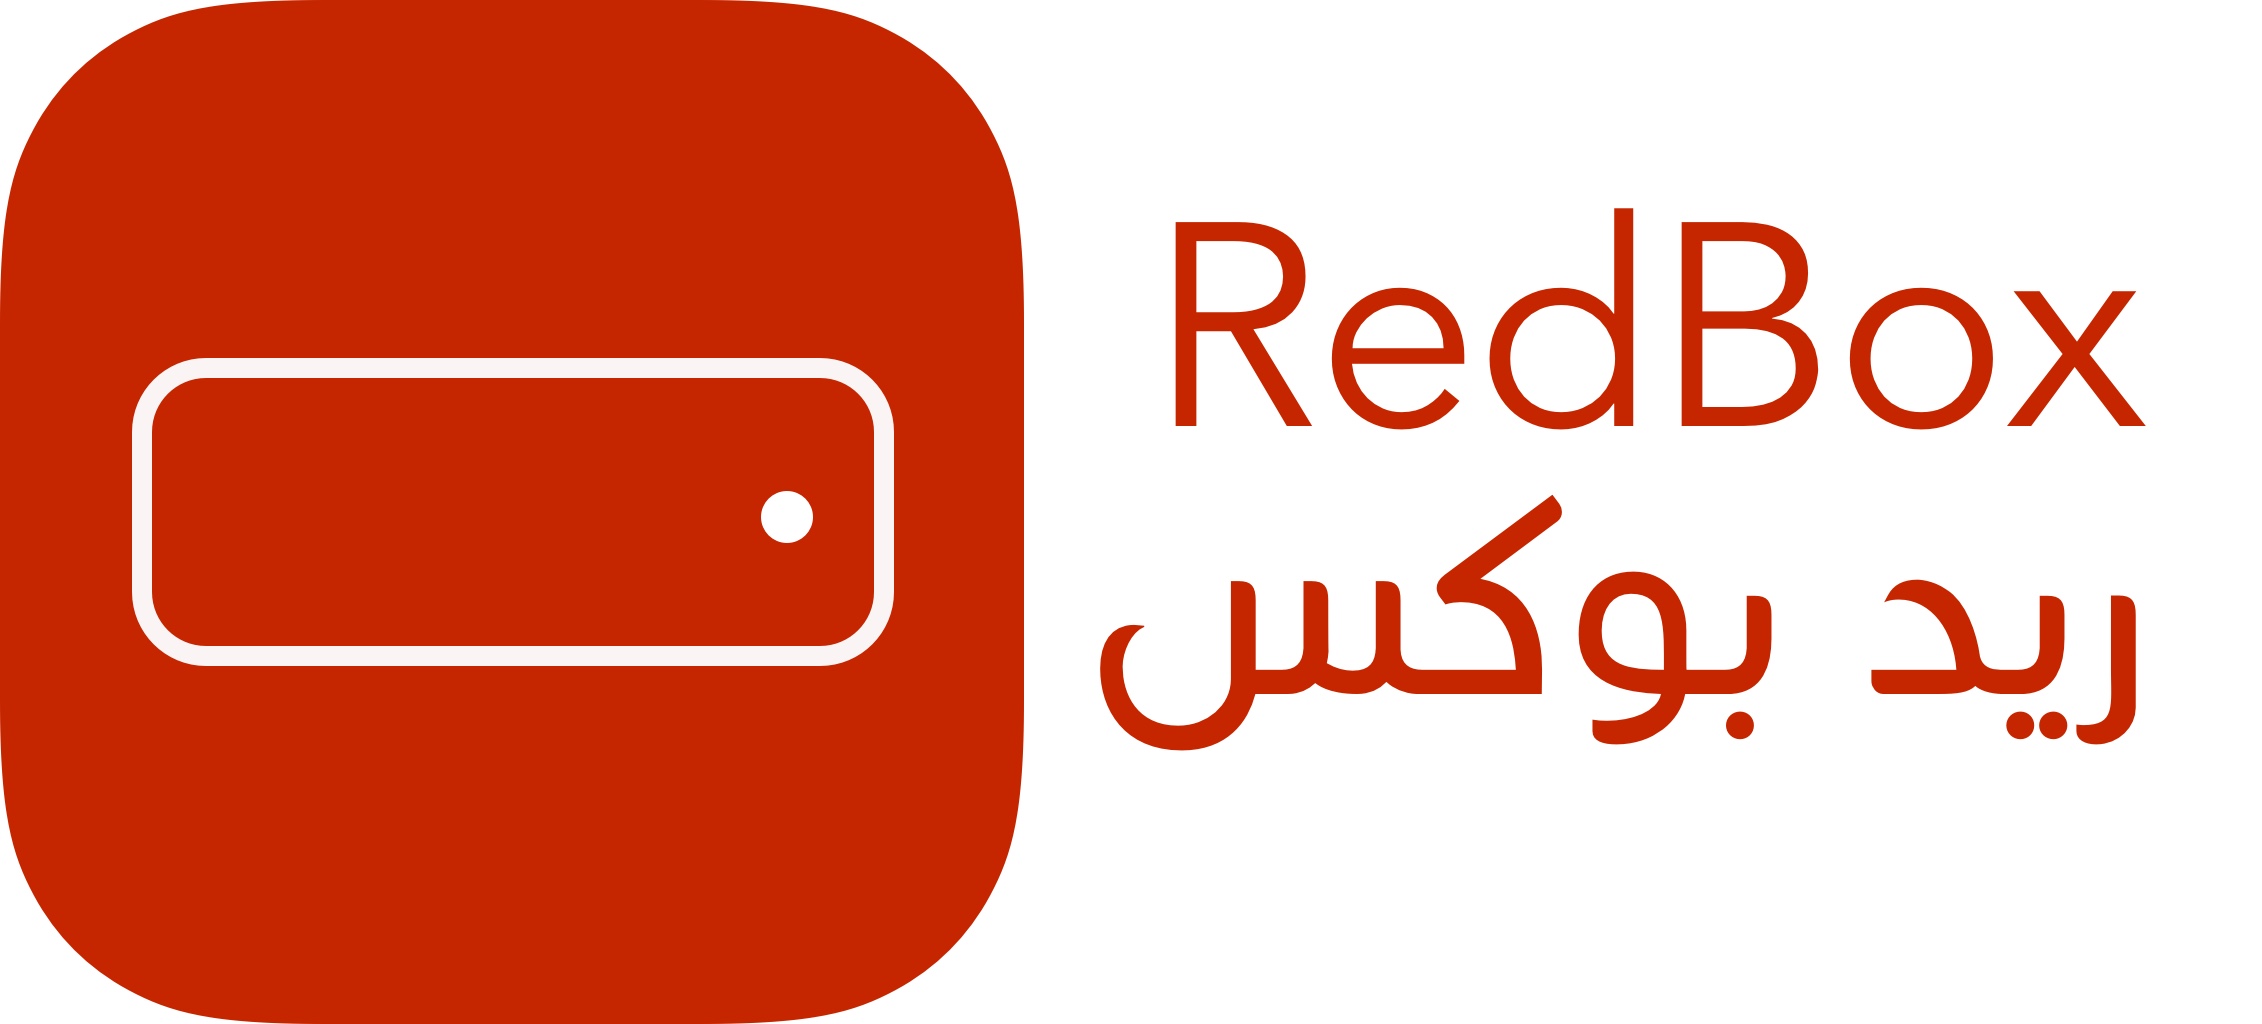 RedBox_logo3